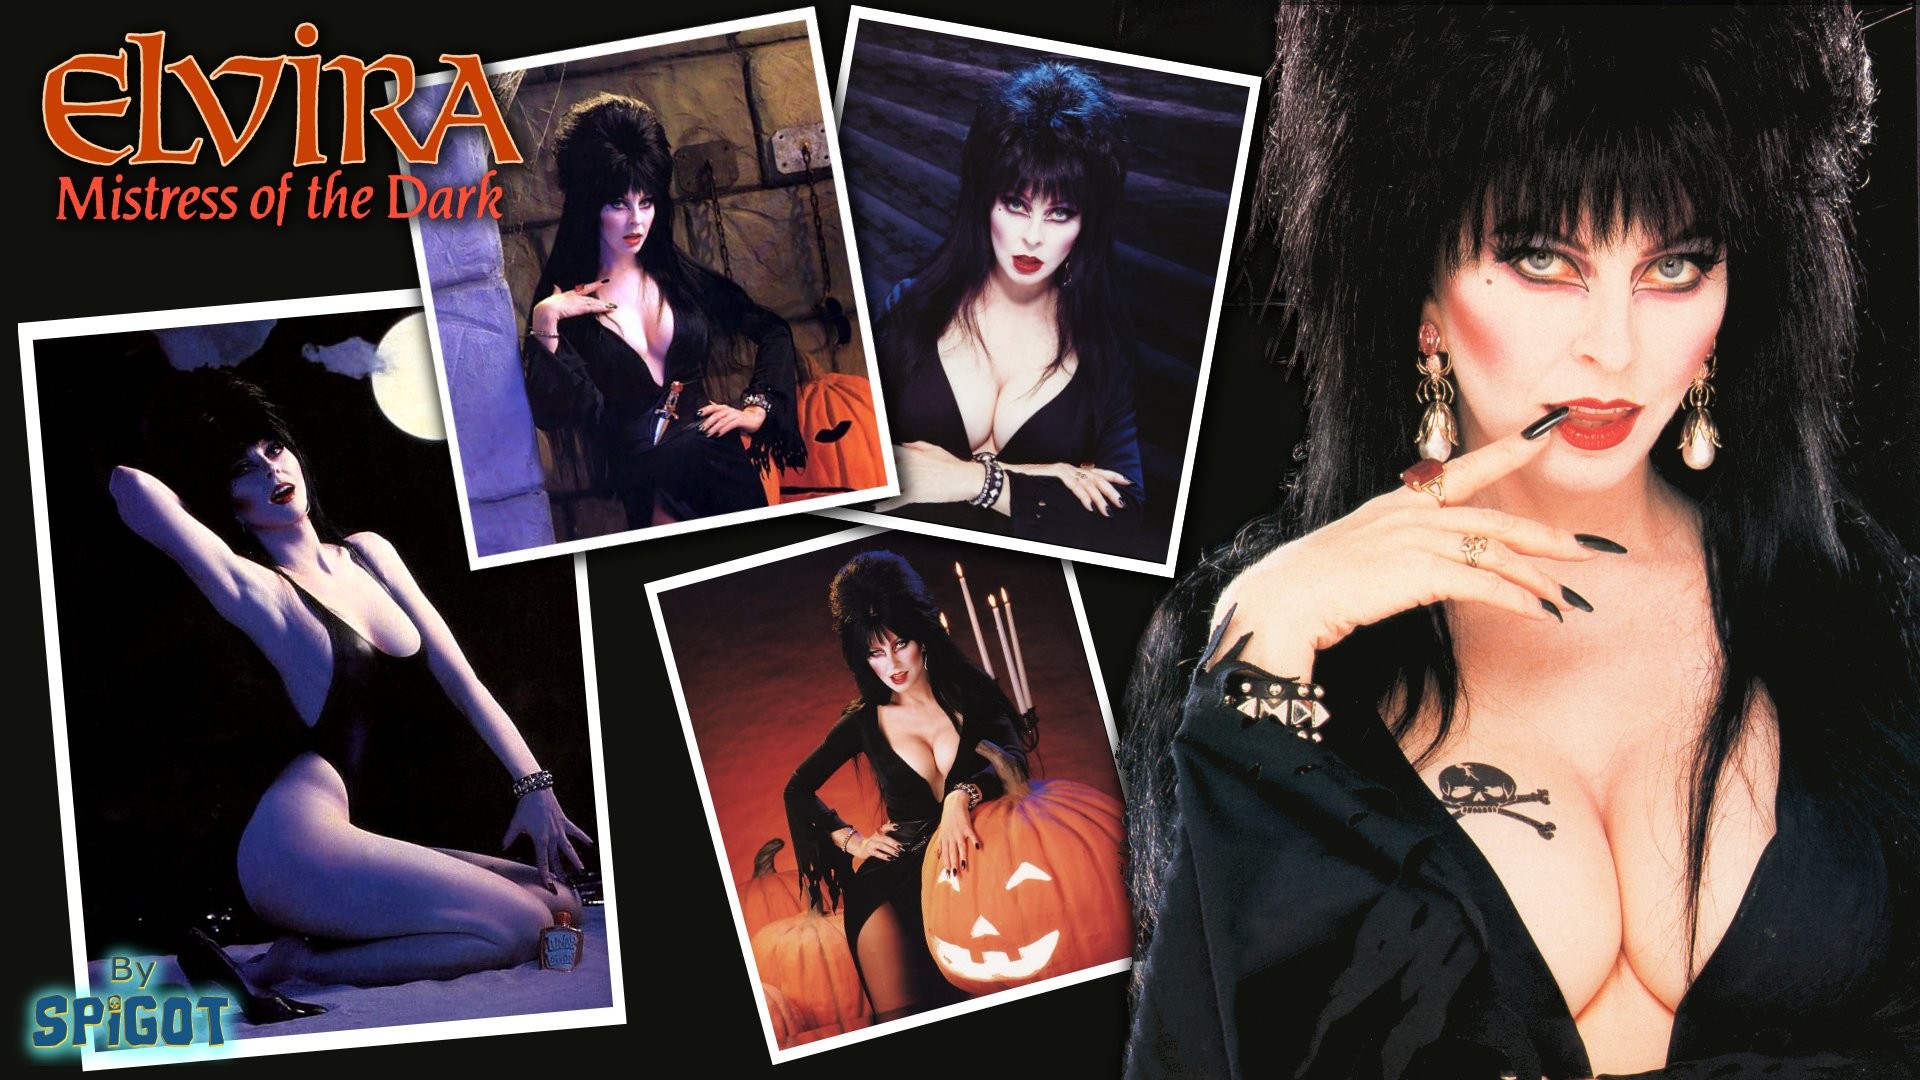 1920x1080 Download Elvira: Mistress of the Dark wallpaper ()